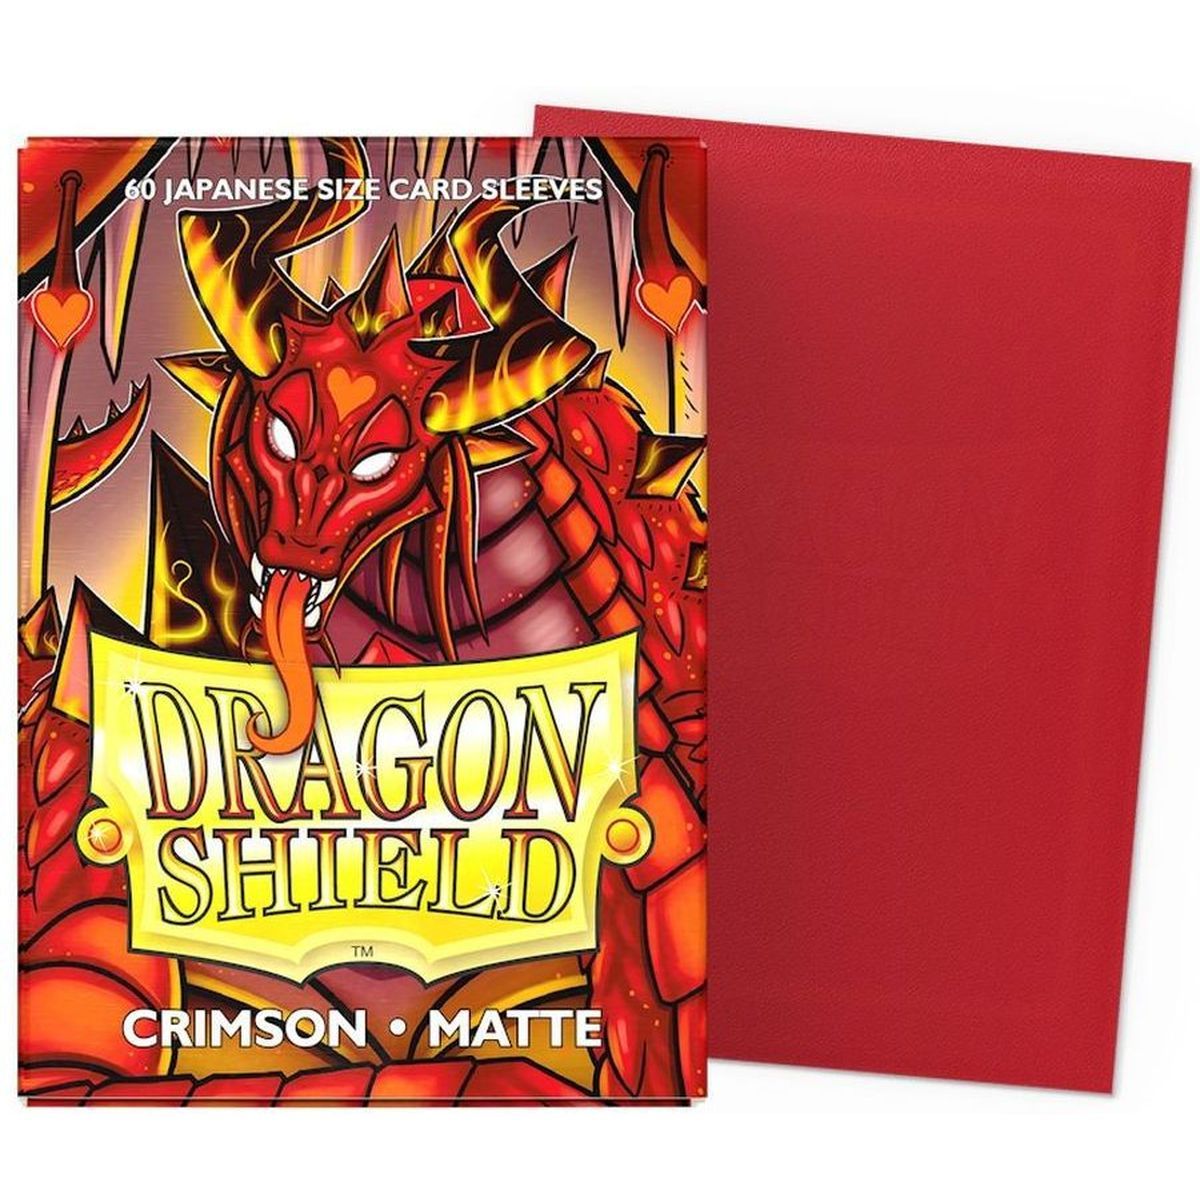 Item Dragon Shield - Small Sleeves - Japanese Size - Crimson (60)